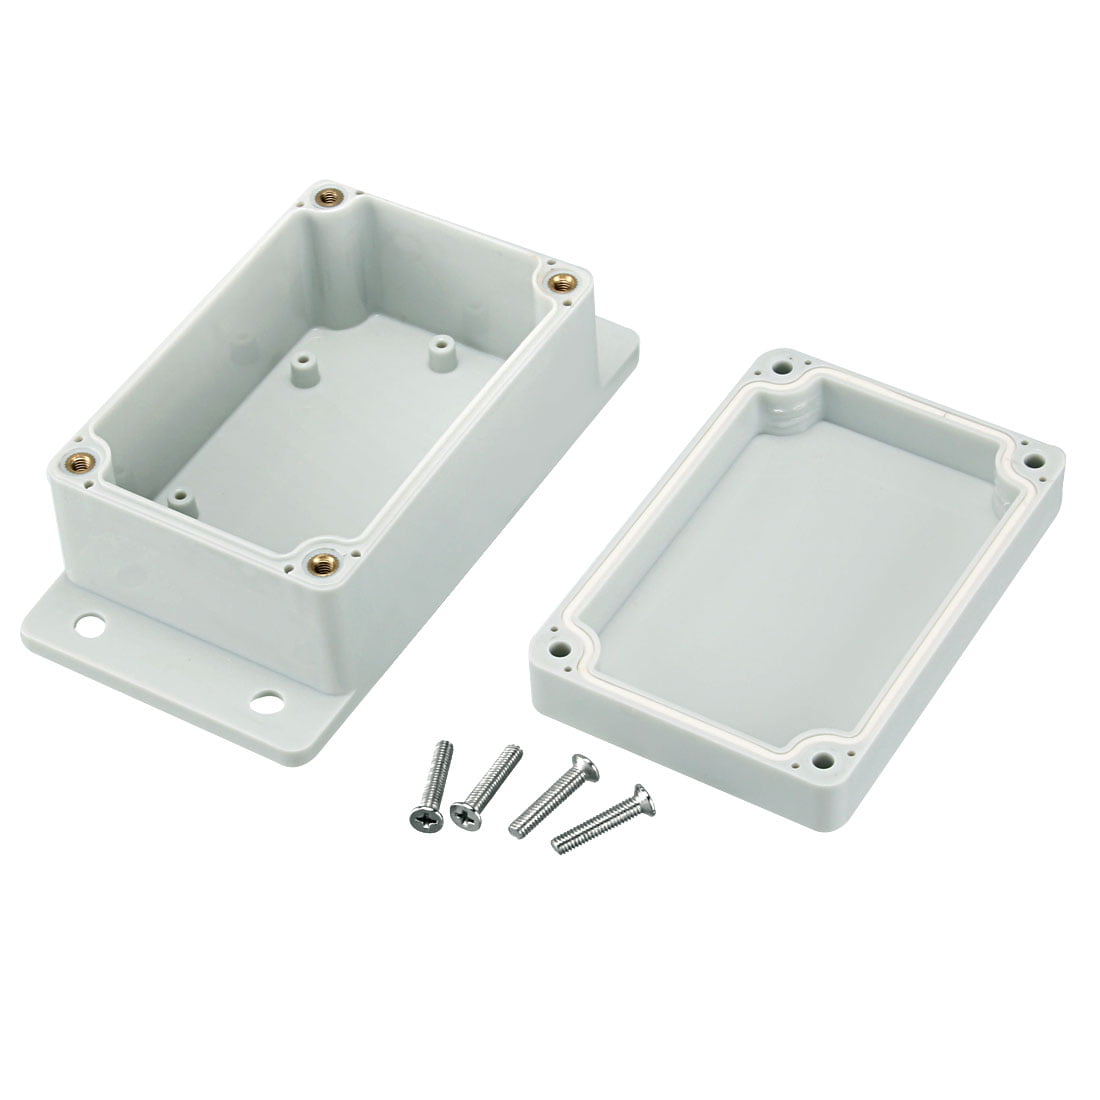 100 x 68 x 50mm Electronic Plastic DIY Junction Box Enclosure Case Gray